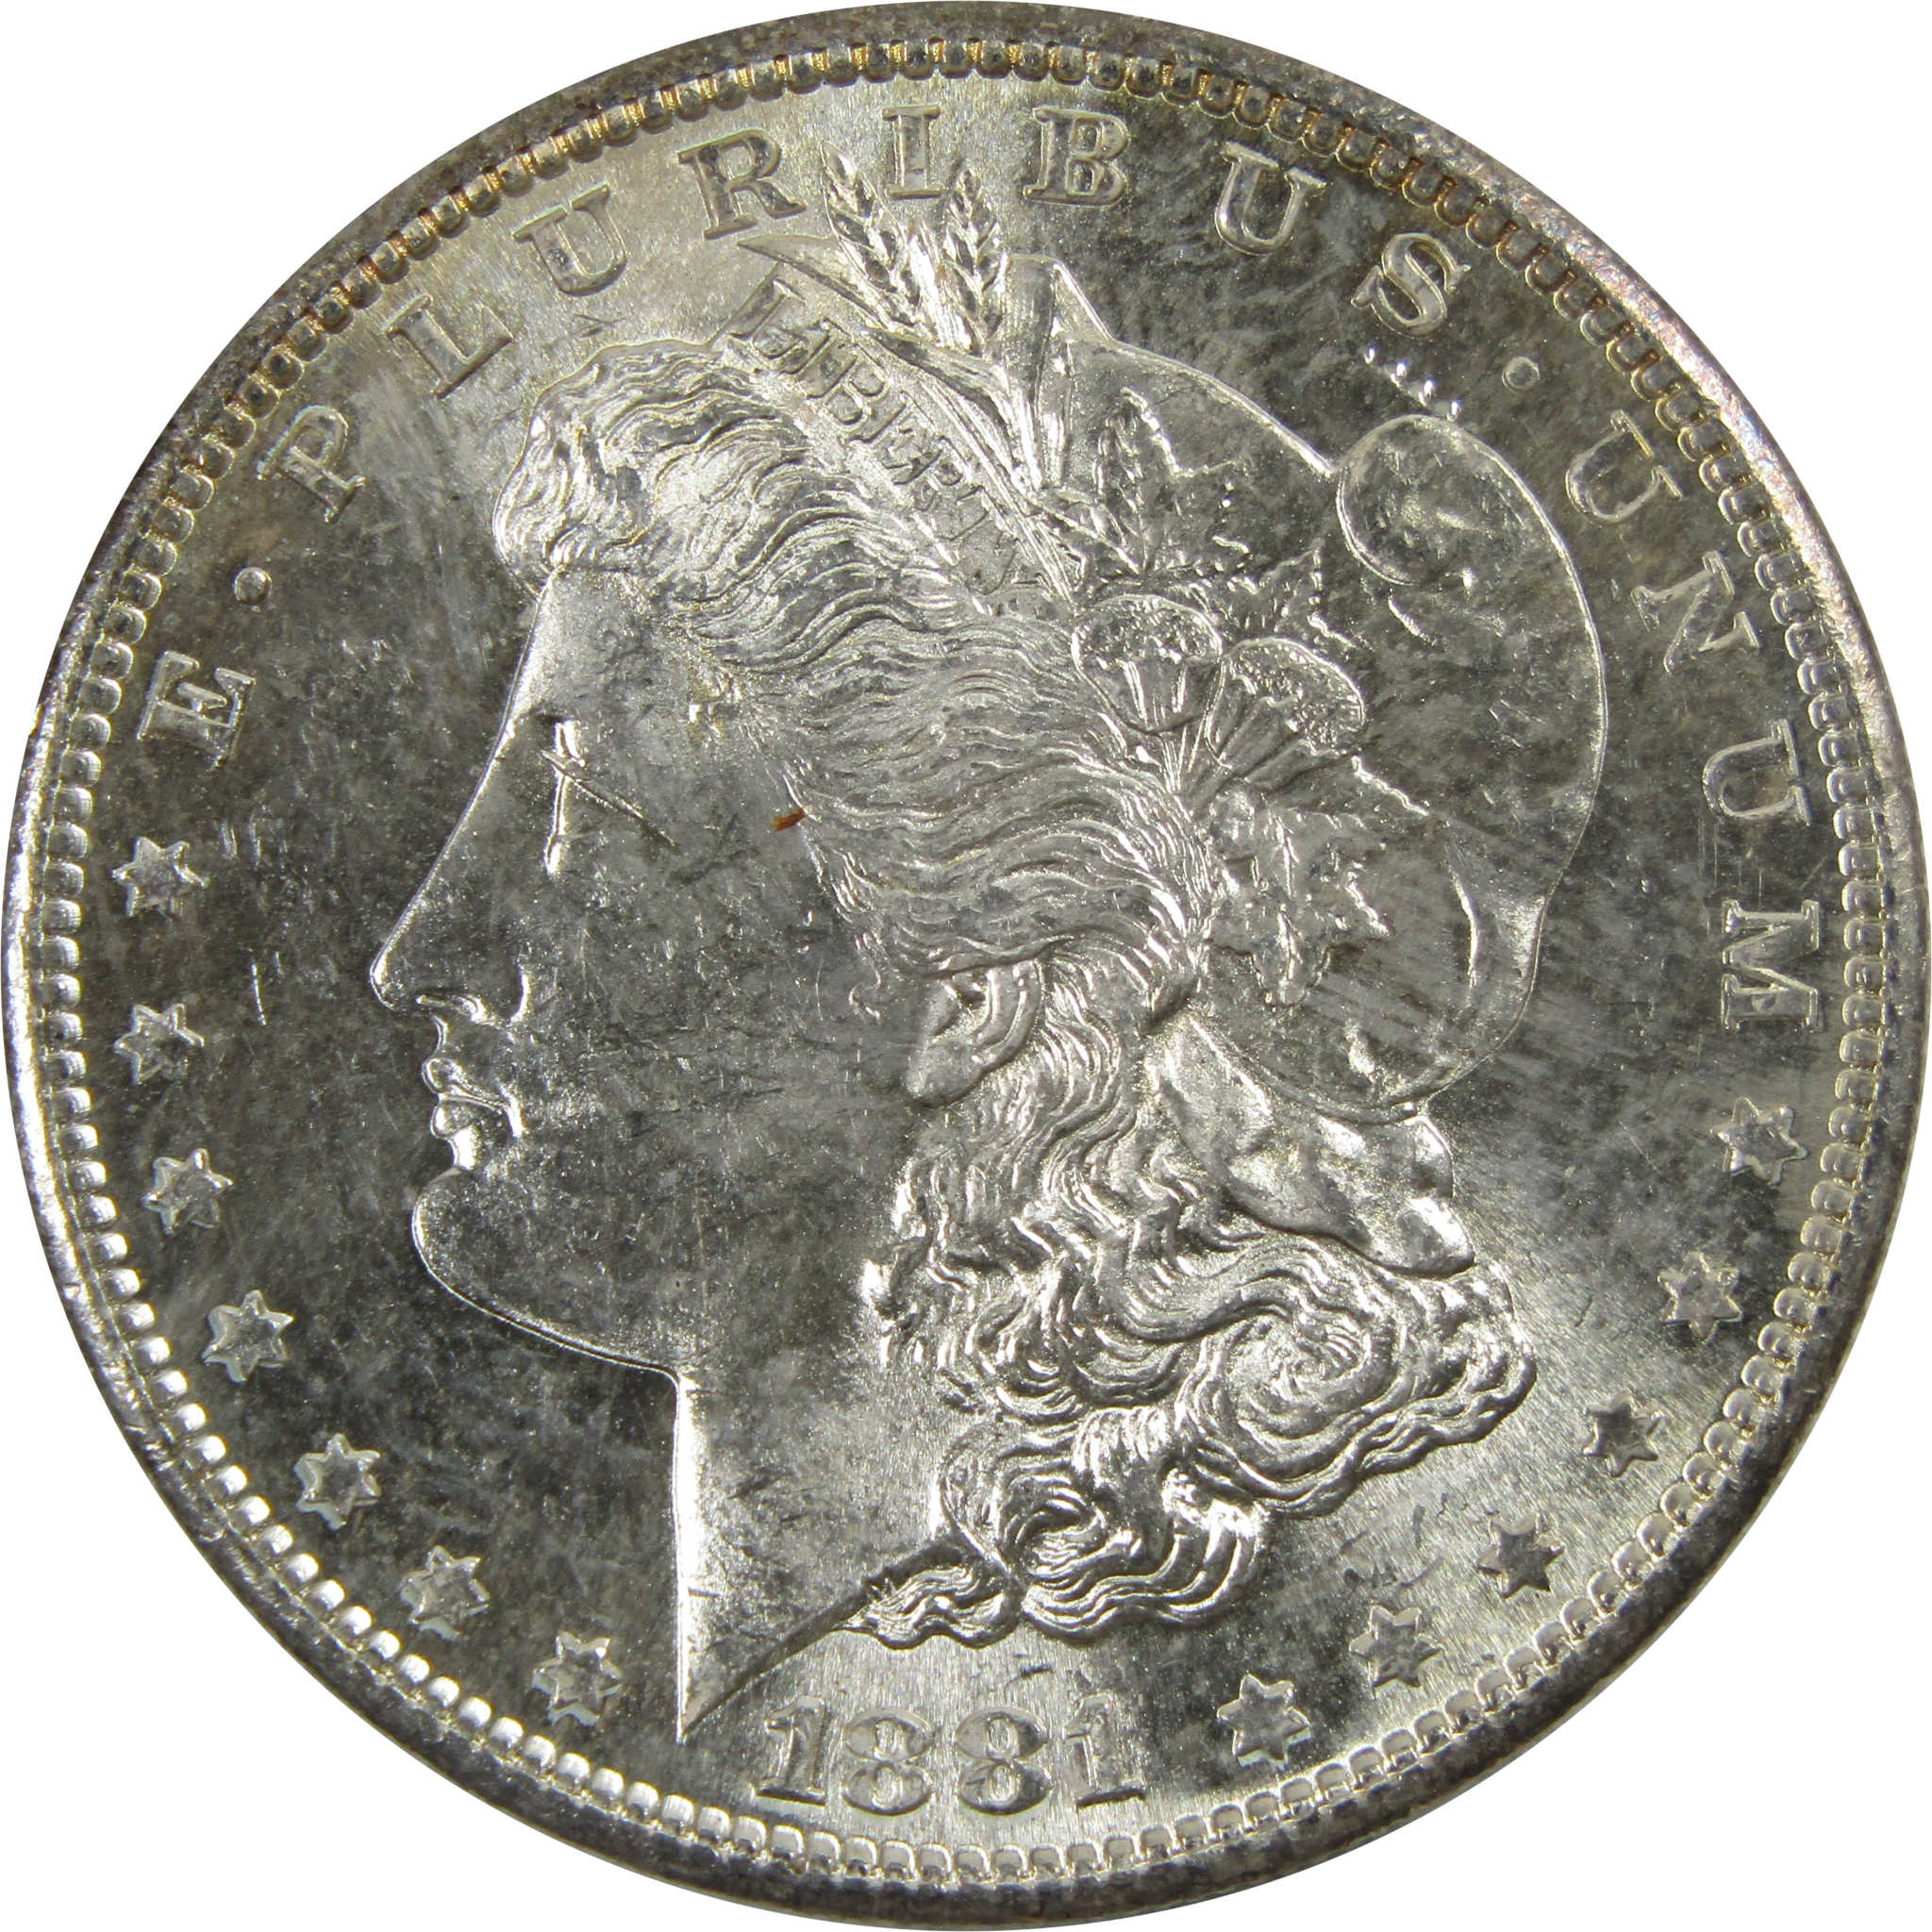 1881 S Morgan Dollar BU Uncirculated 90% Silver $1 Coin SKU:I5306 - Morgan coin - Morgan silver dollar - Morgan silver dollar for sale - Profile Coins &amp; Collectibles